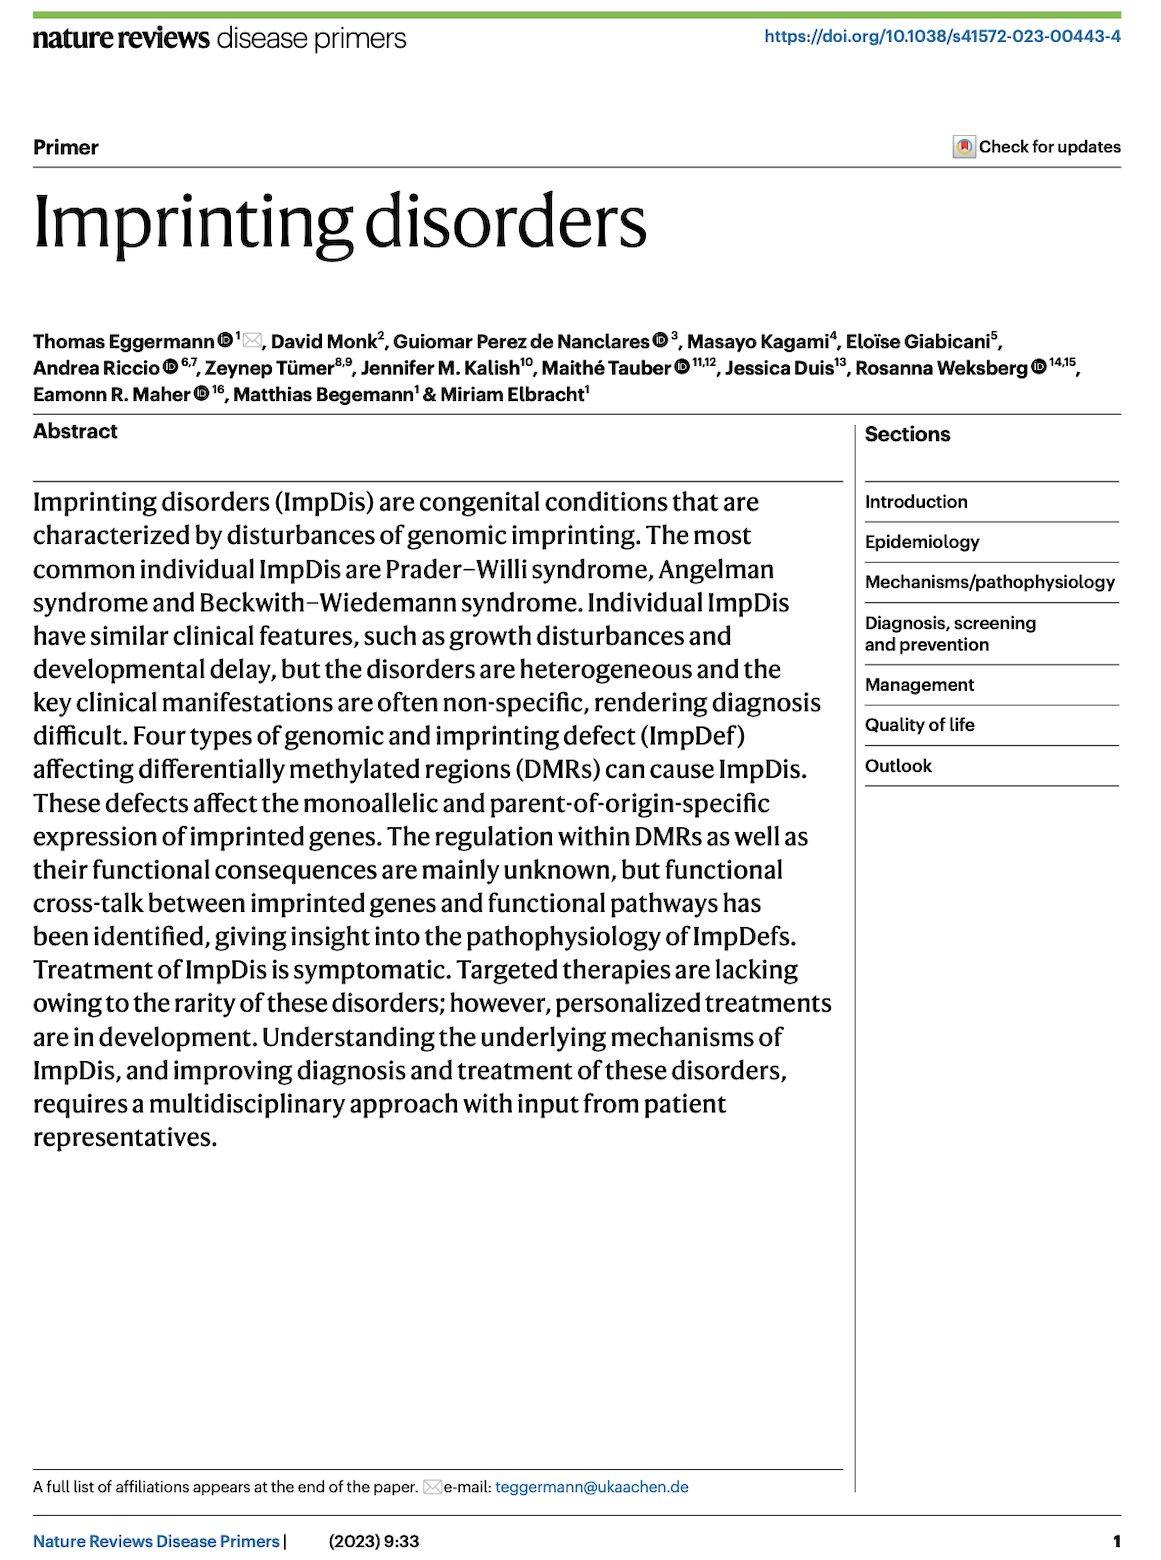 Eggerman, Thomas, et al. 'Imprinting disorders.' Nat Rev Dis Primers 9.33 (2023).